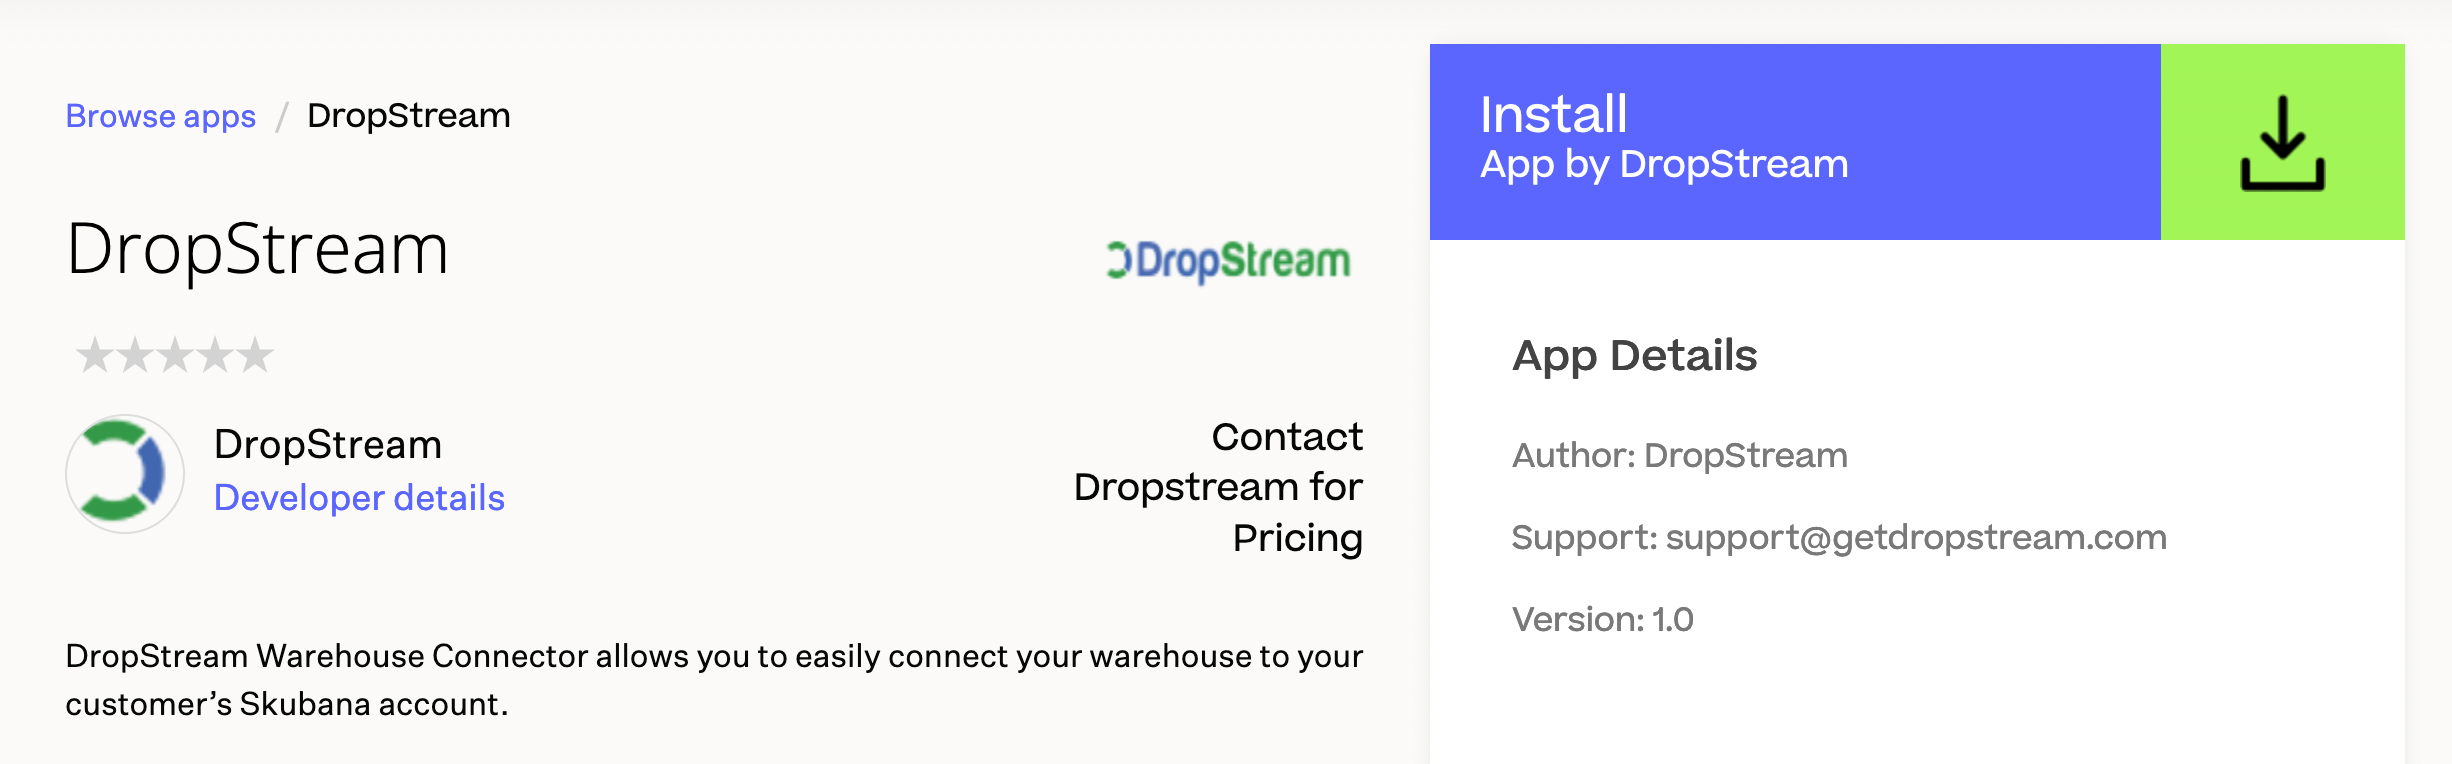 Install the DropStream app in the Skubana app store